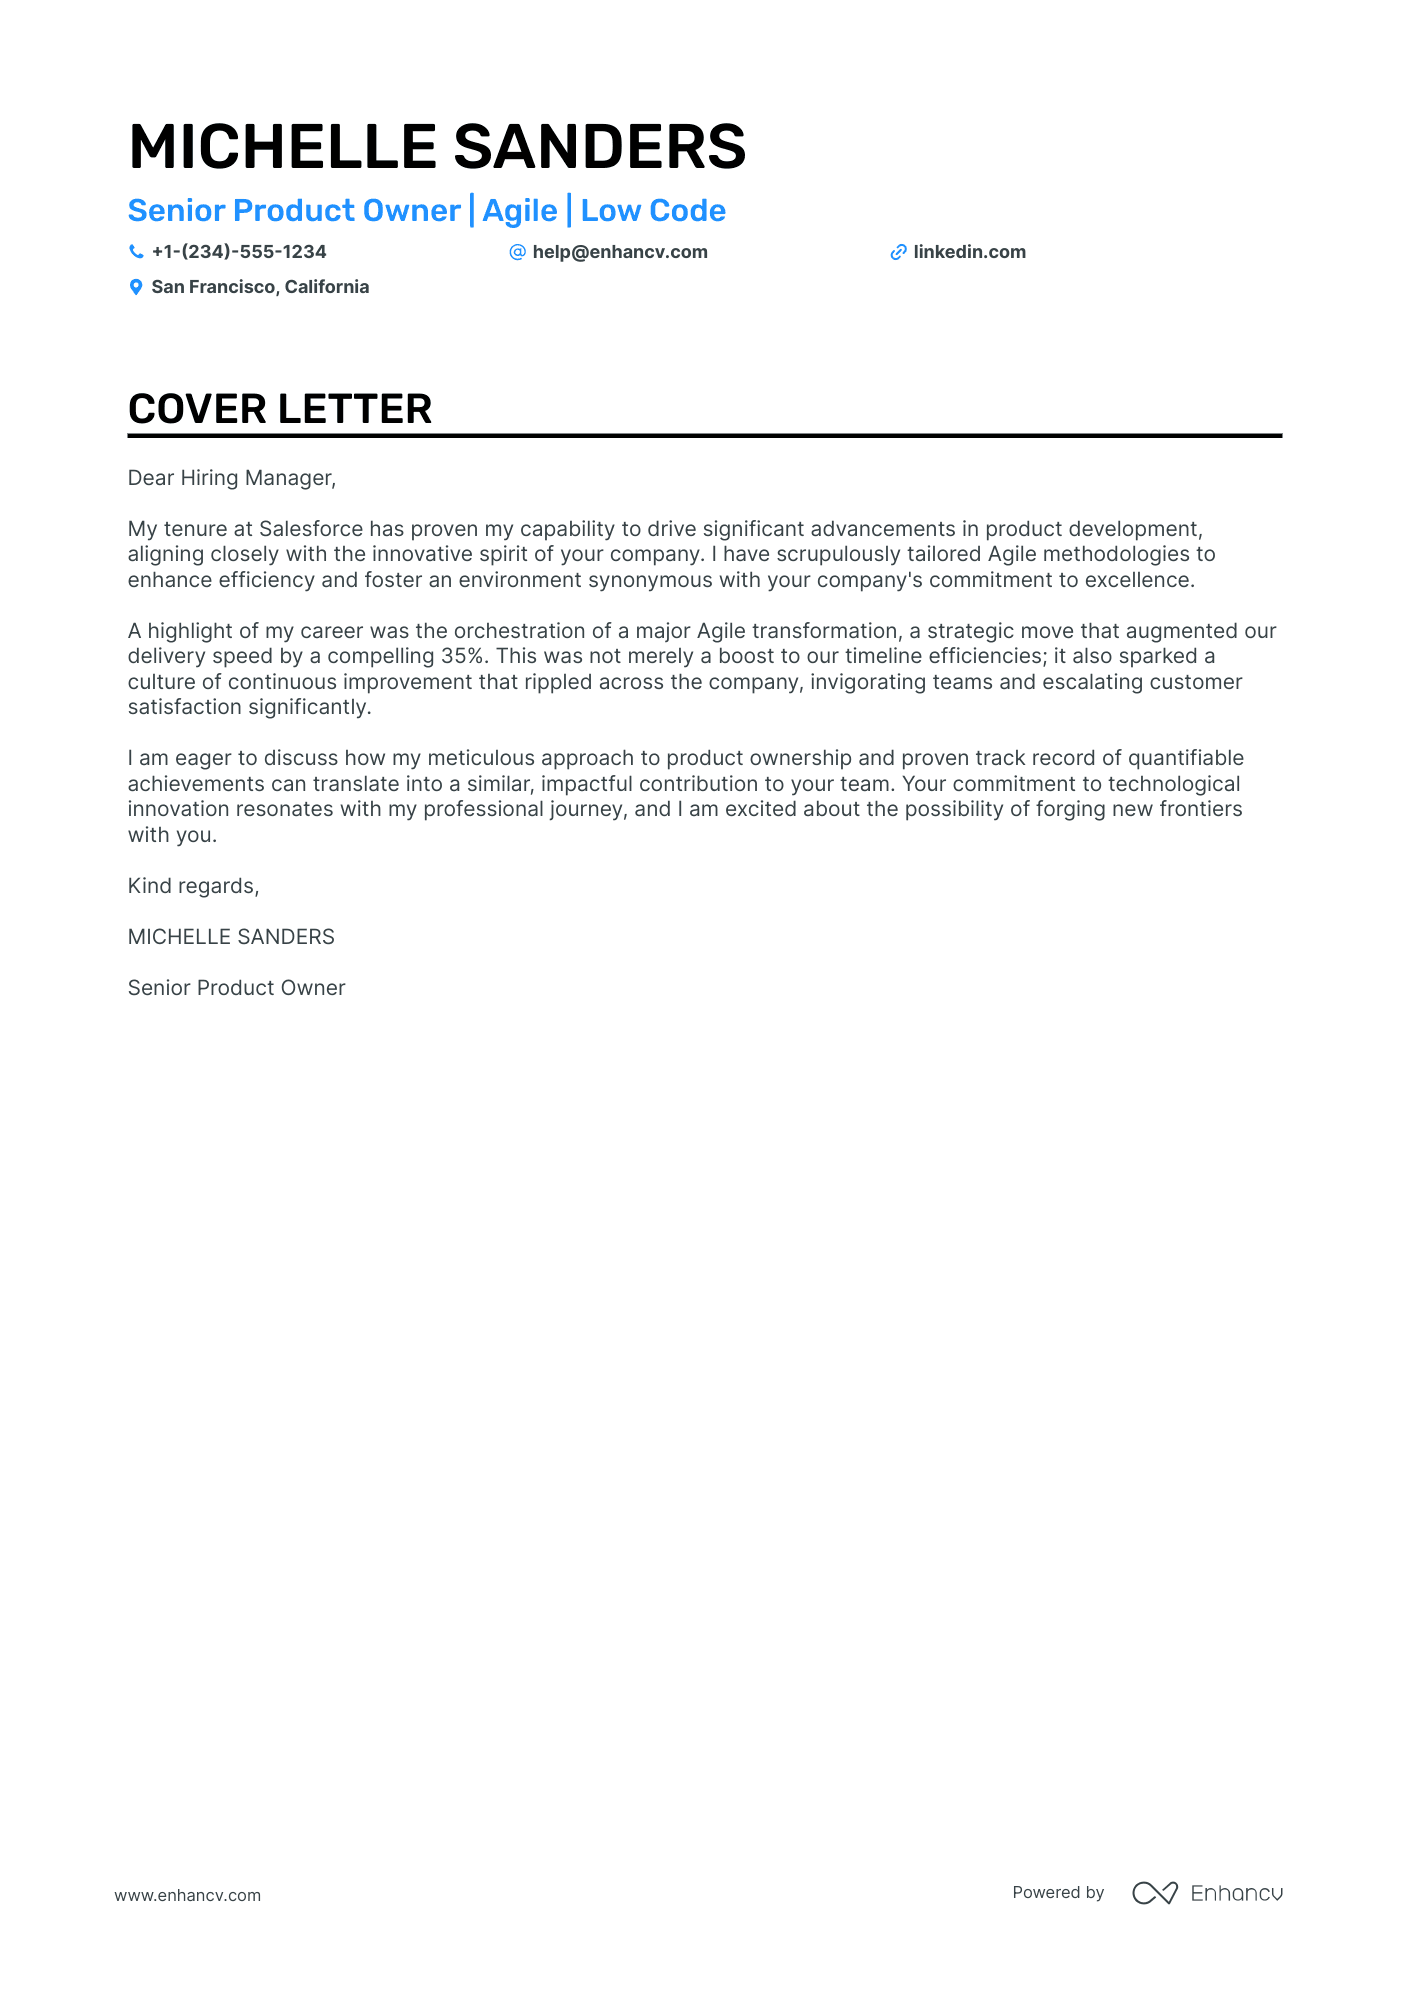 Senior Product Owner cover letter